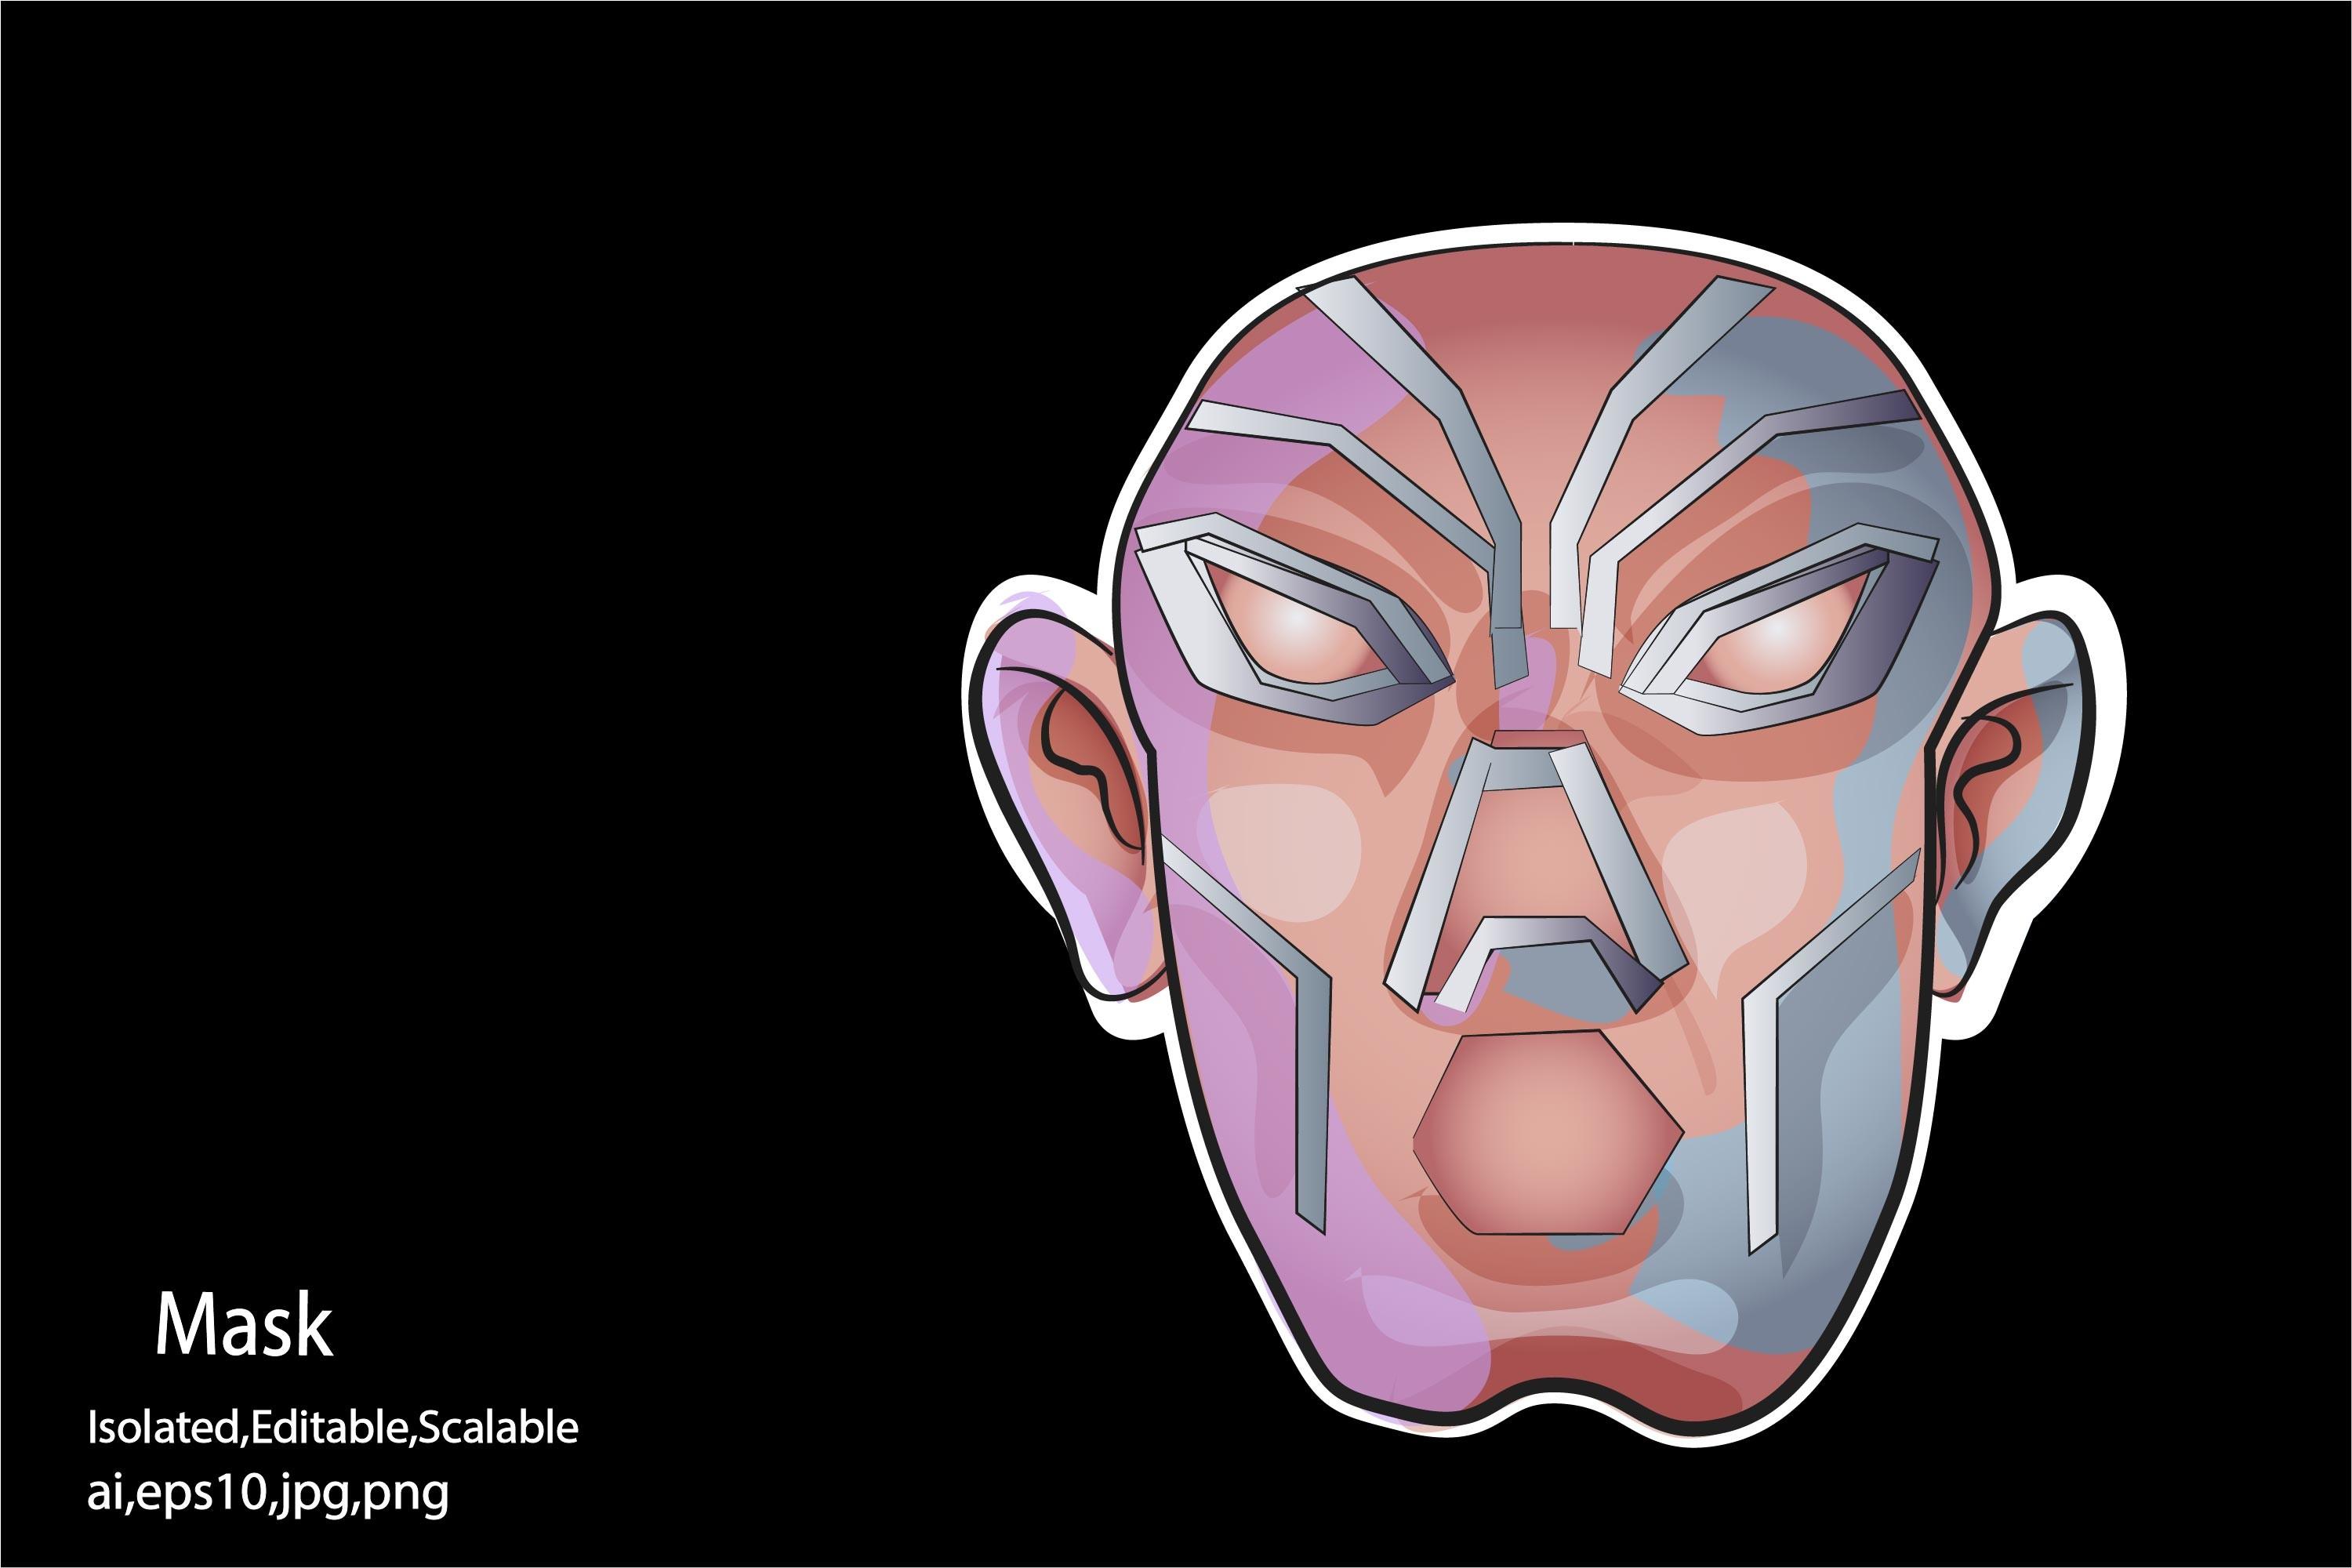 Mask Vector Illustration